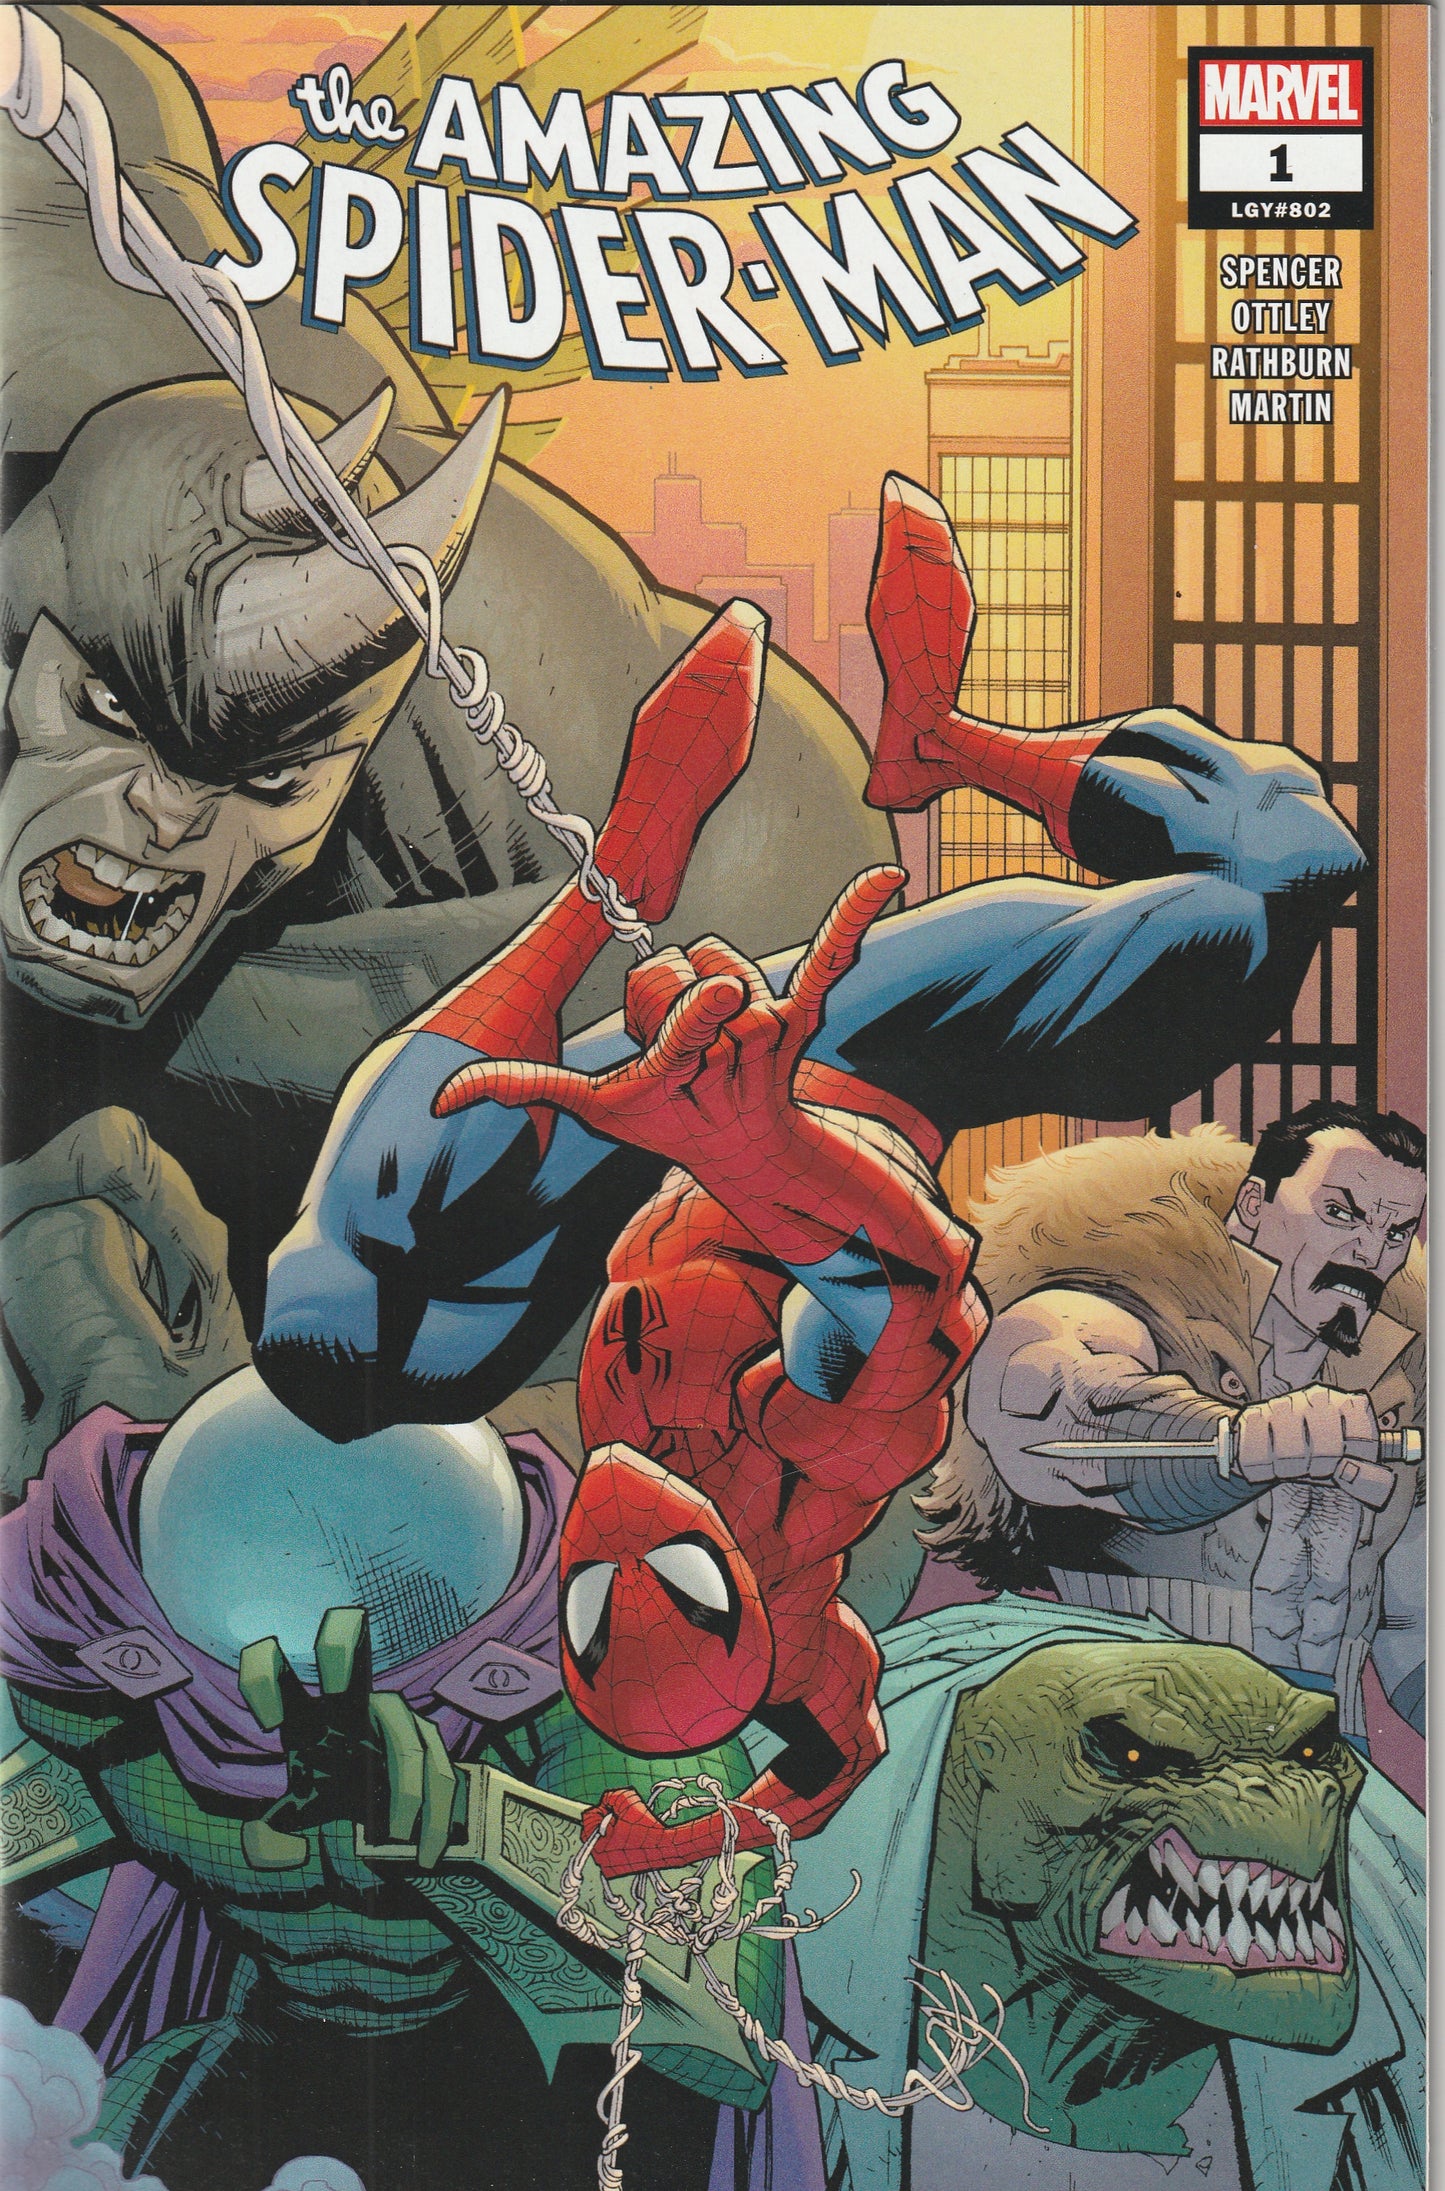 Amazing Spider-Man #1 (LGY #802) (Vol 6, 2018) - 1st Appearance of Kindred, Amanda Clarksdale, Cindy Lawton, Michael Prescott